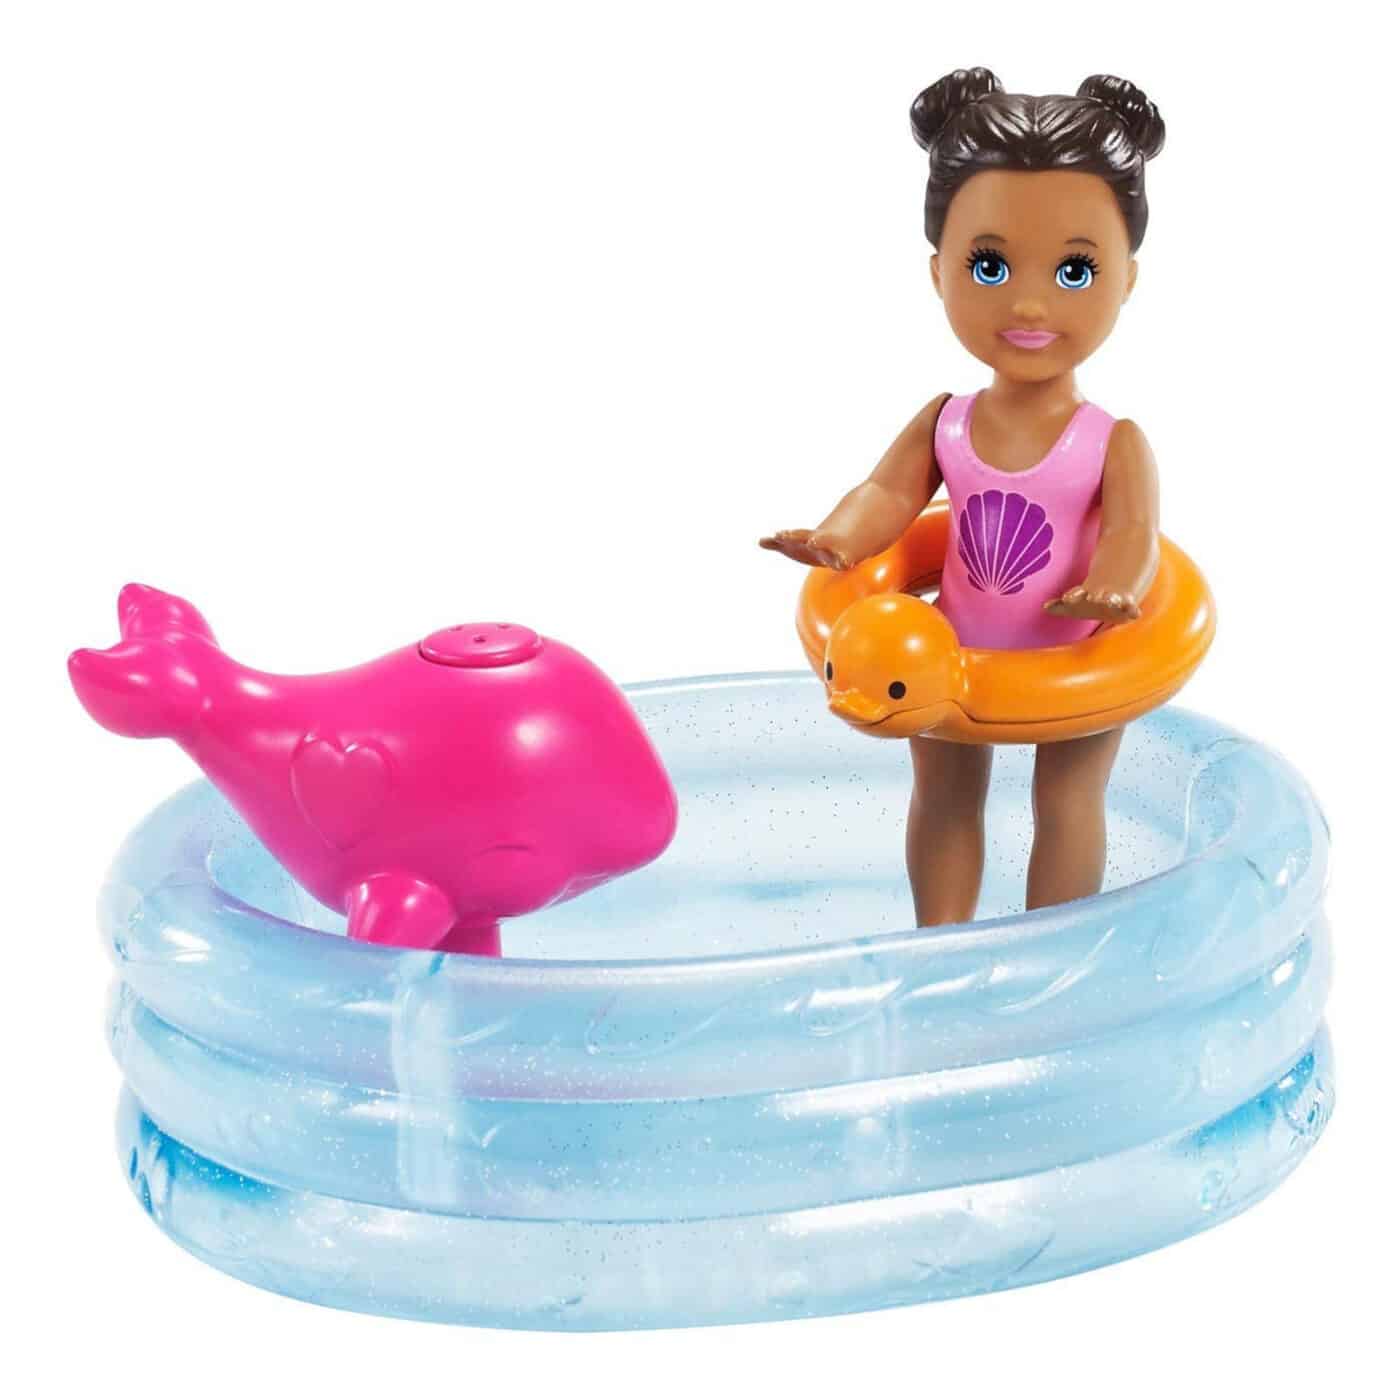 Barbie - Skipper Babysitters Inc Doll Playset - Water-Theme